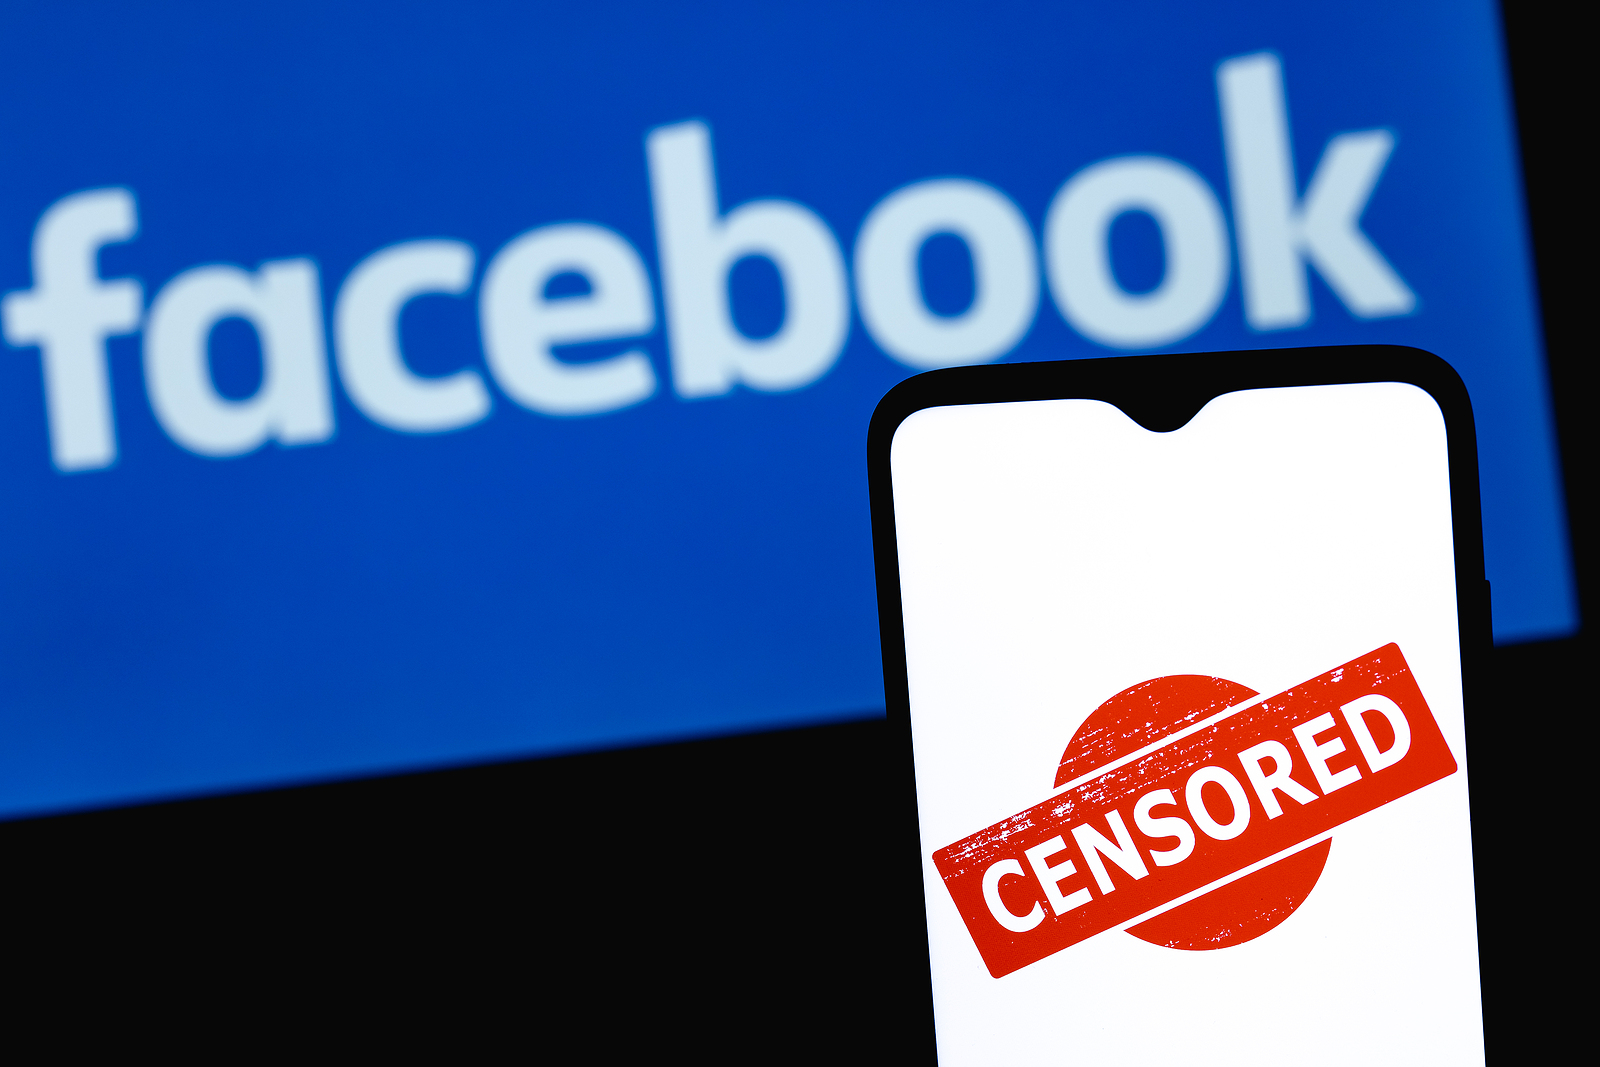 Big Tech censorship